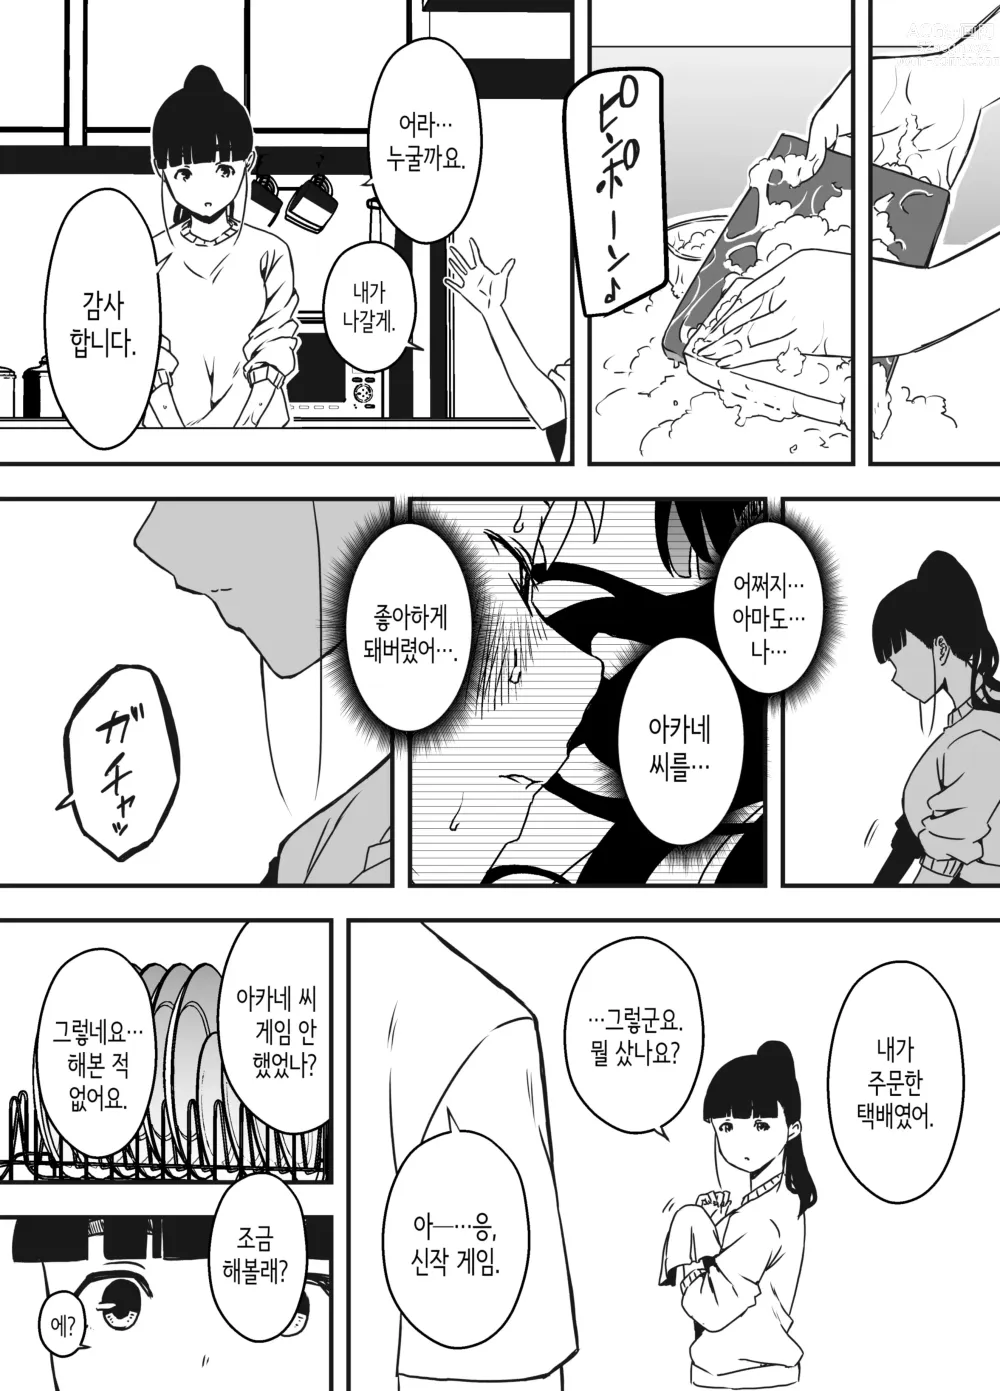 Page 22 of doujinshi 의붓 누나와의 7일간 생활 5